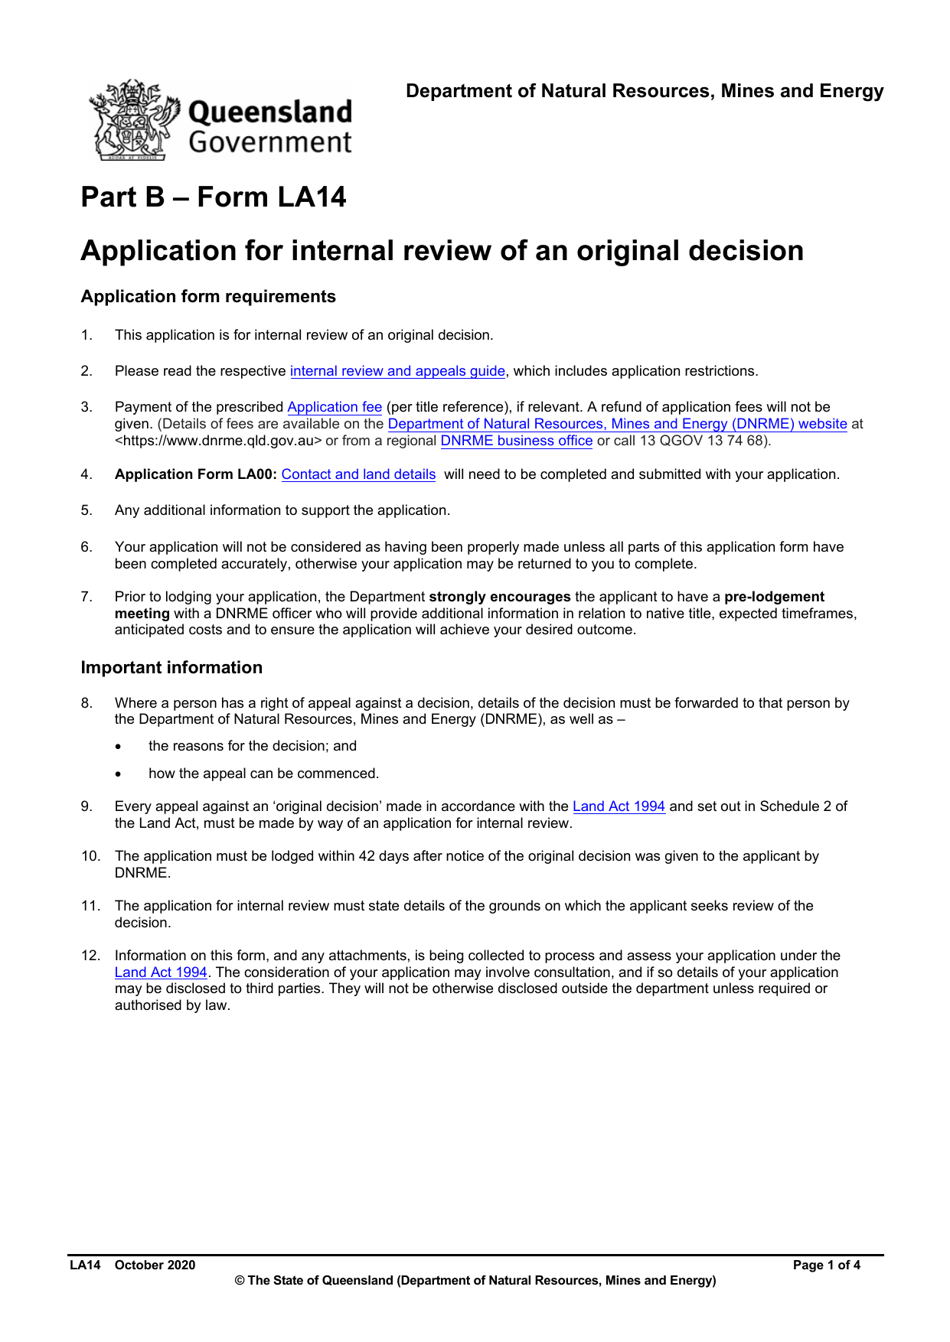 Form LA14 Part B Application for Internal Review of an Original Decision - Queensland, Australia, Page 1